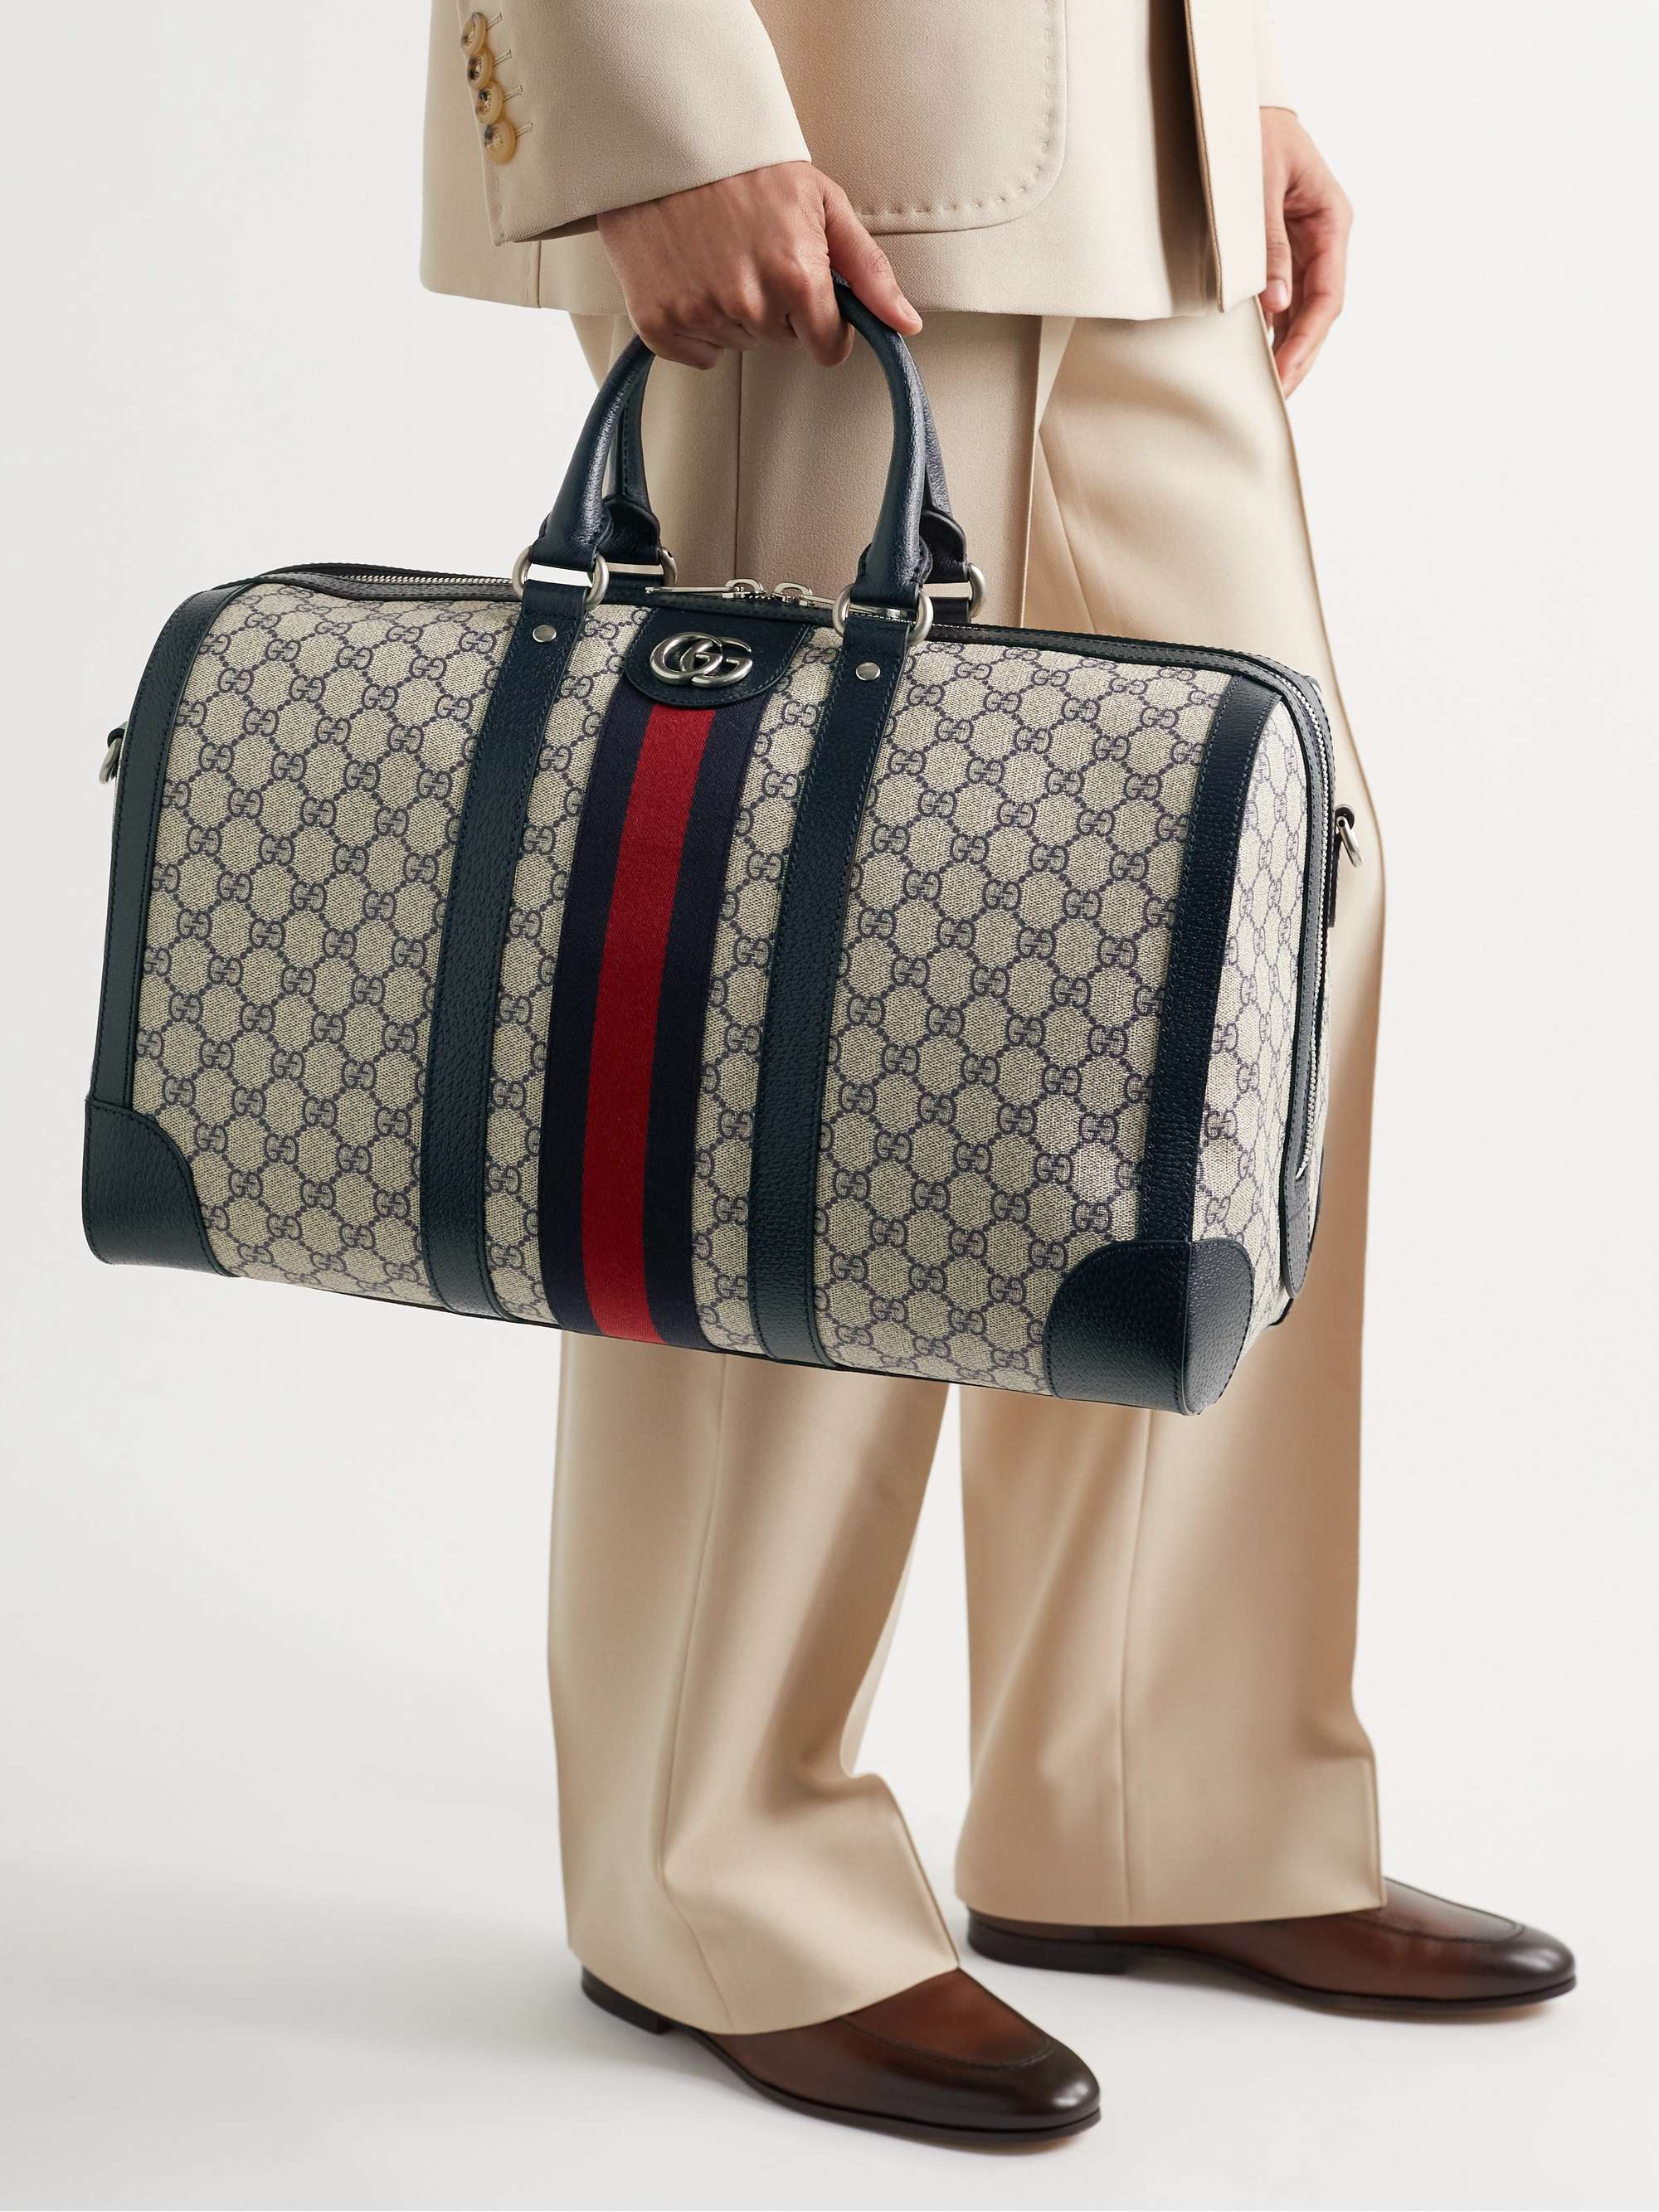 Gucci Men's Travel Bags - Bags